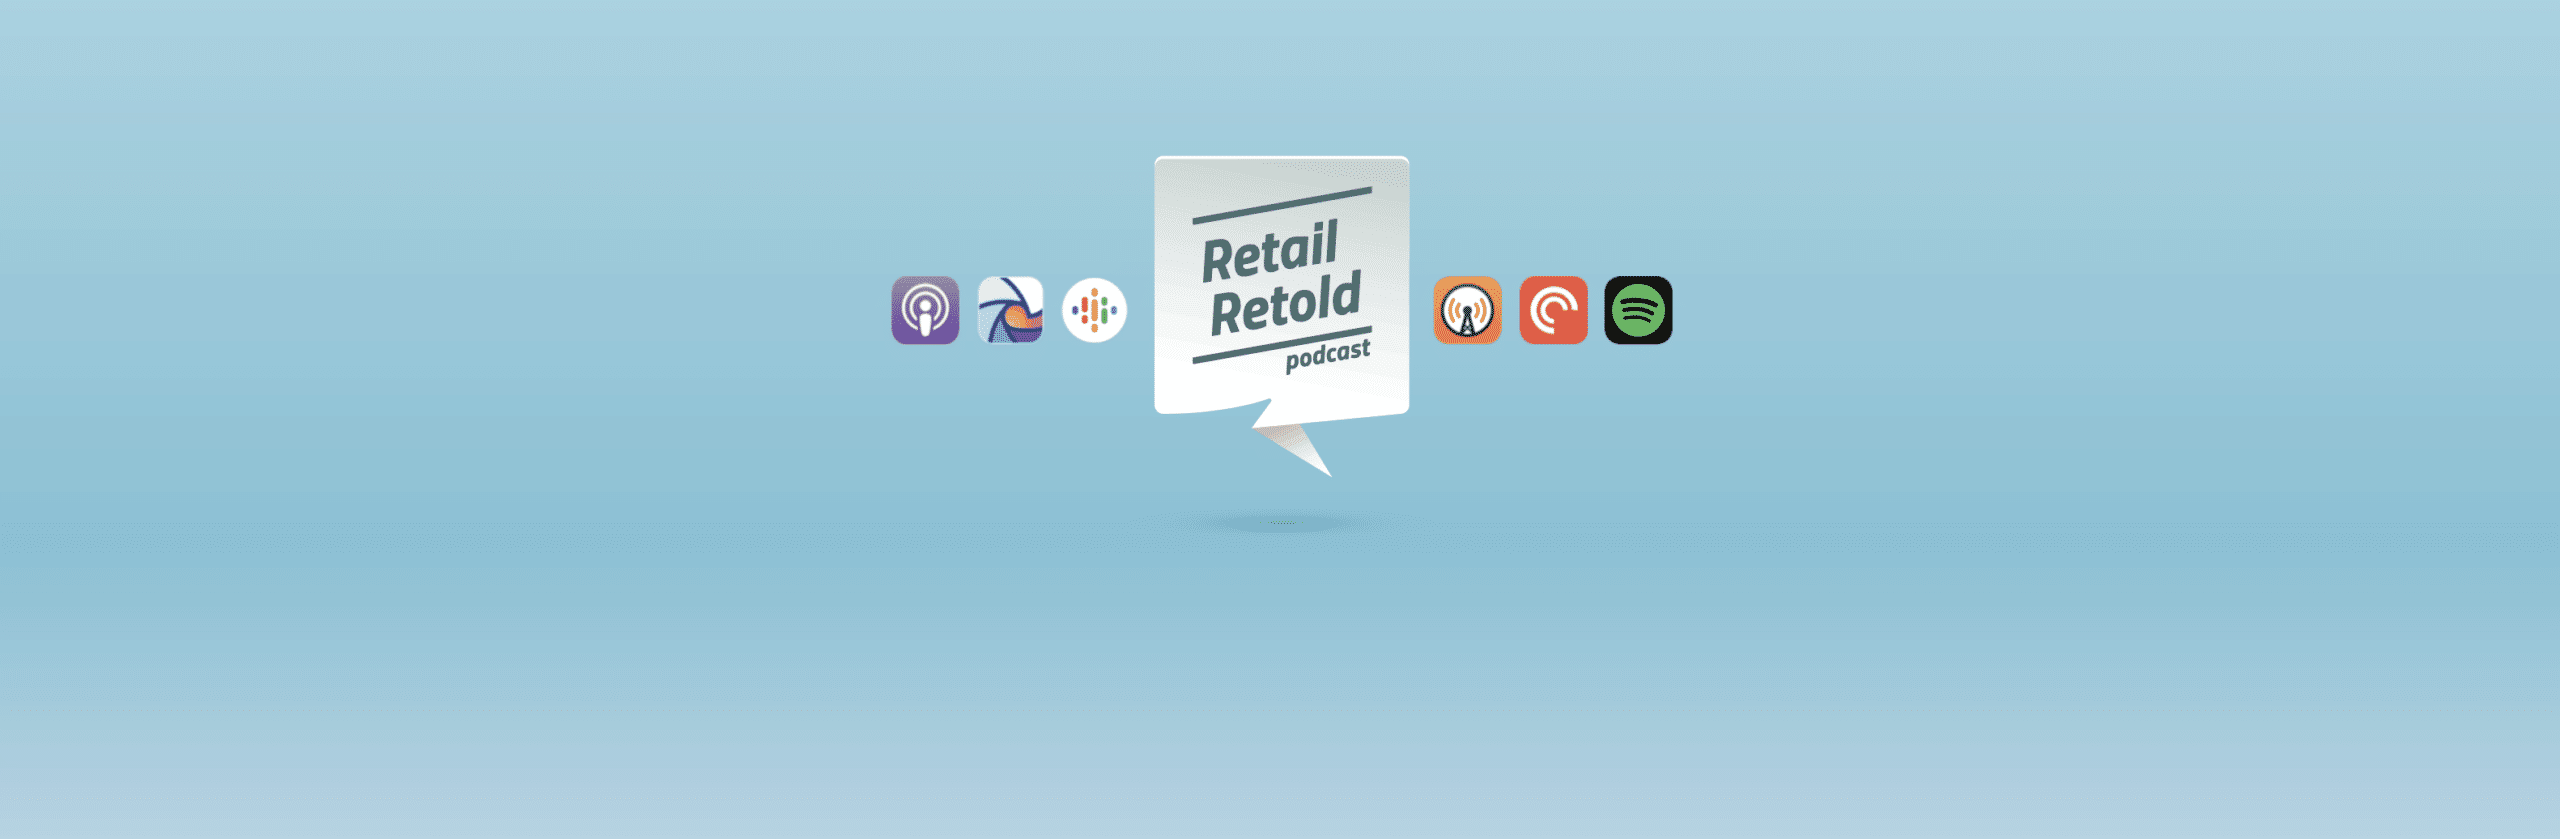 Retail Retold podcast graphic